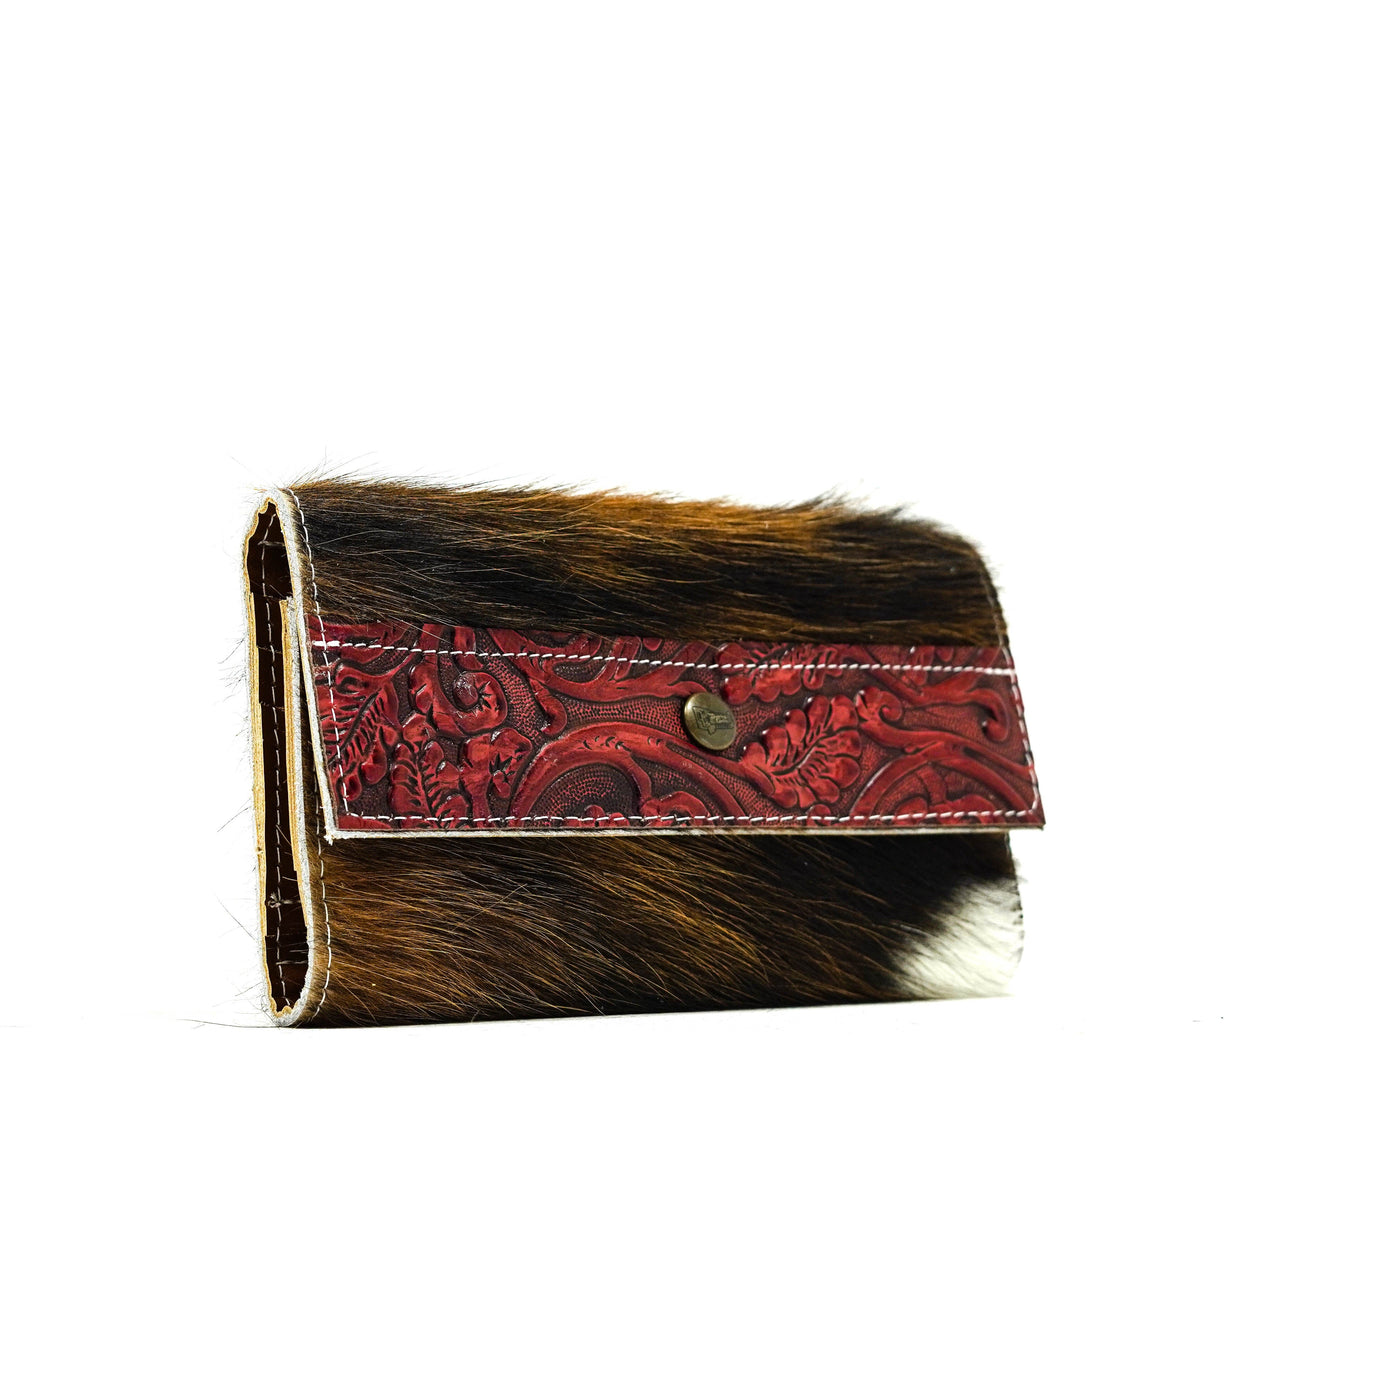 Kacey Wallet - Tricolor w/ Burgundy Tool-Kacey Wallet-Western-Cowhide-Bags-Handmade-Products-Gifts-Dancing Cactus Designs